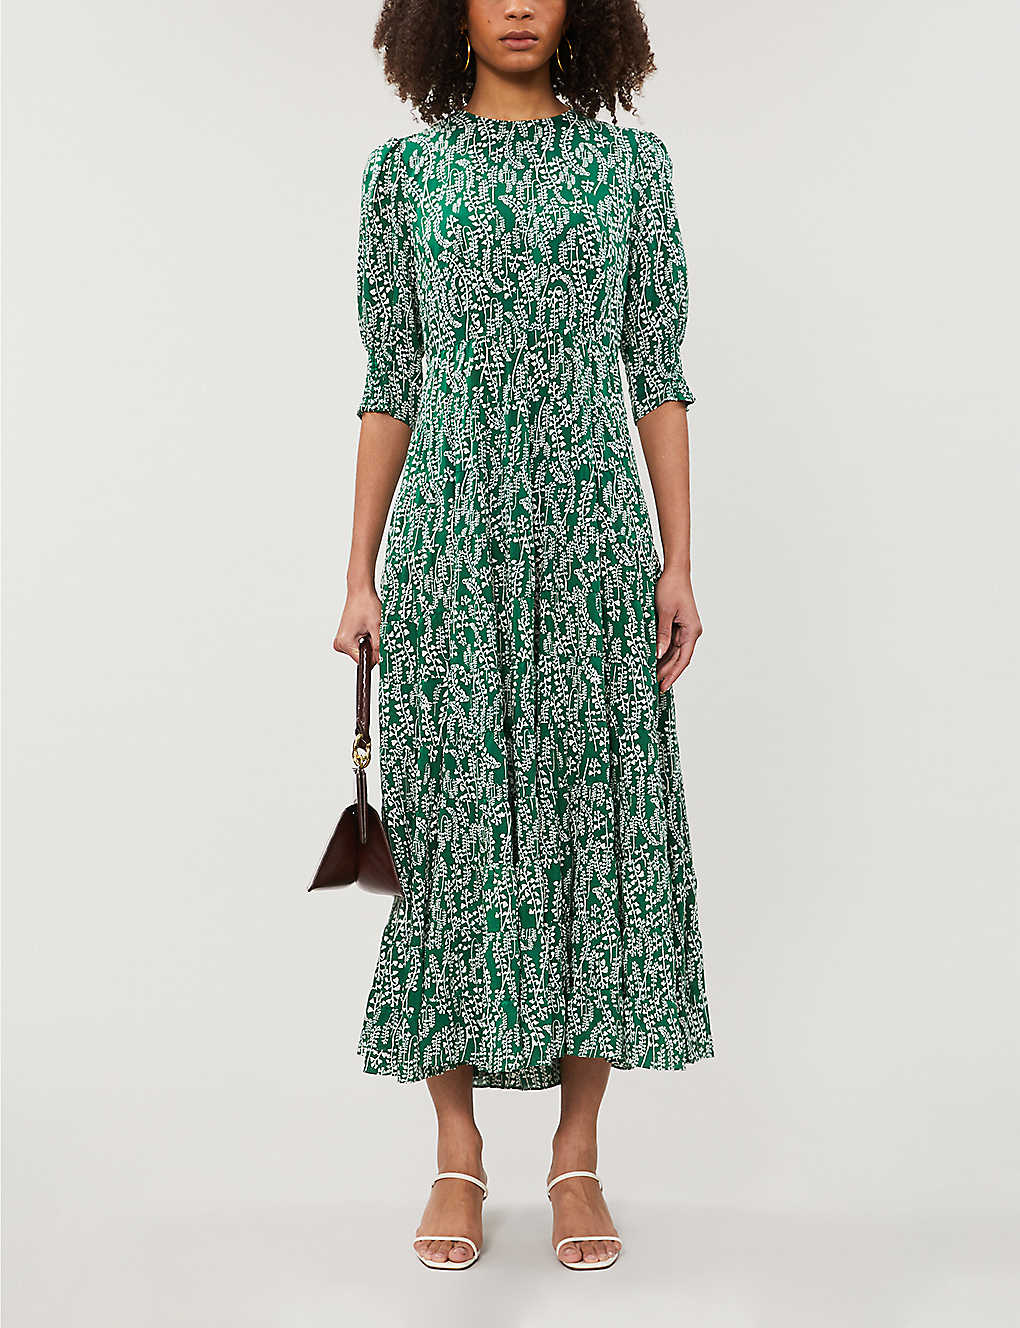 RIXO - Kristen floral-print tiered cotton-blend maxi dress | Selfridges.com